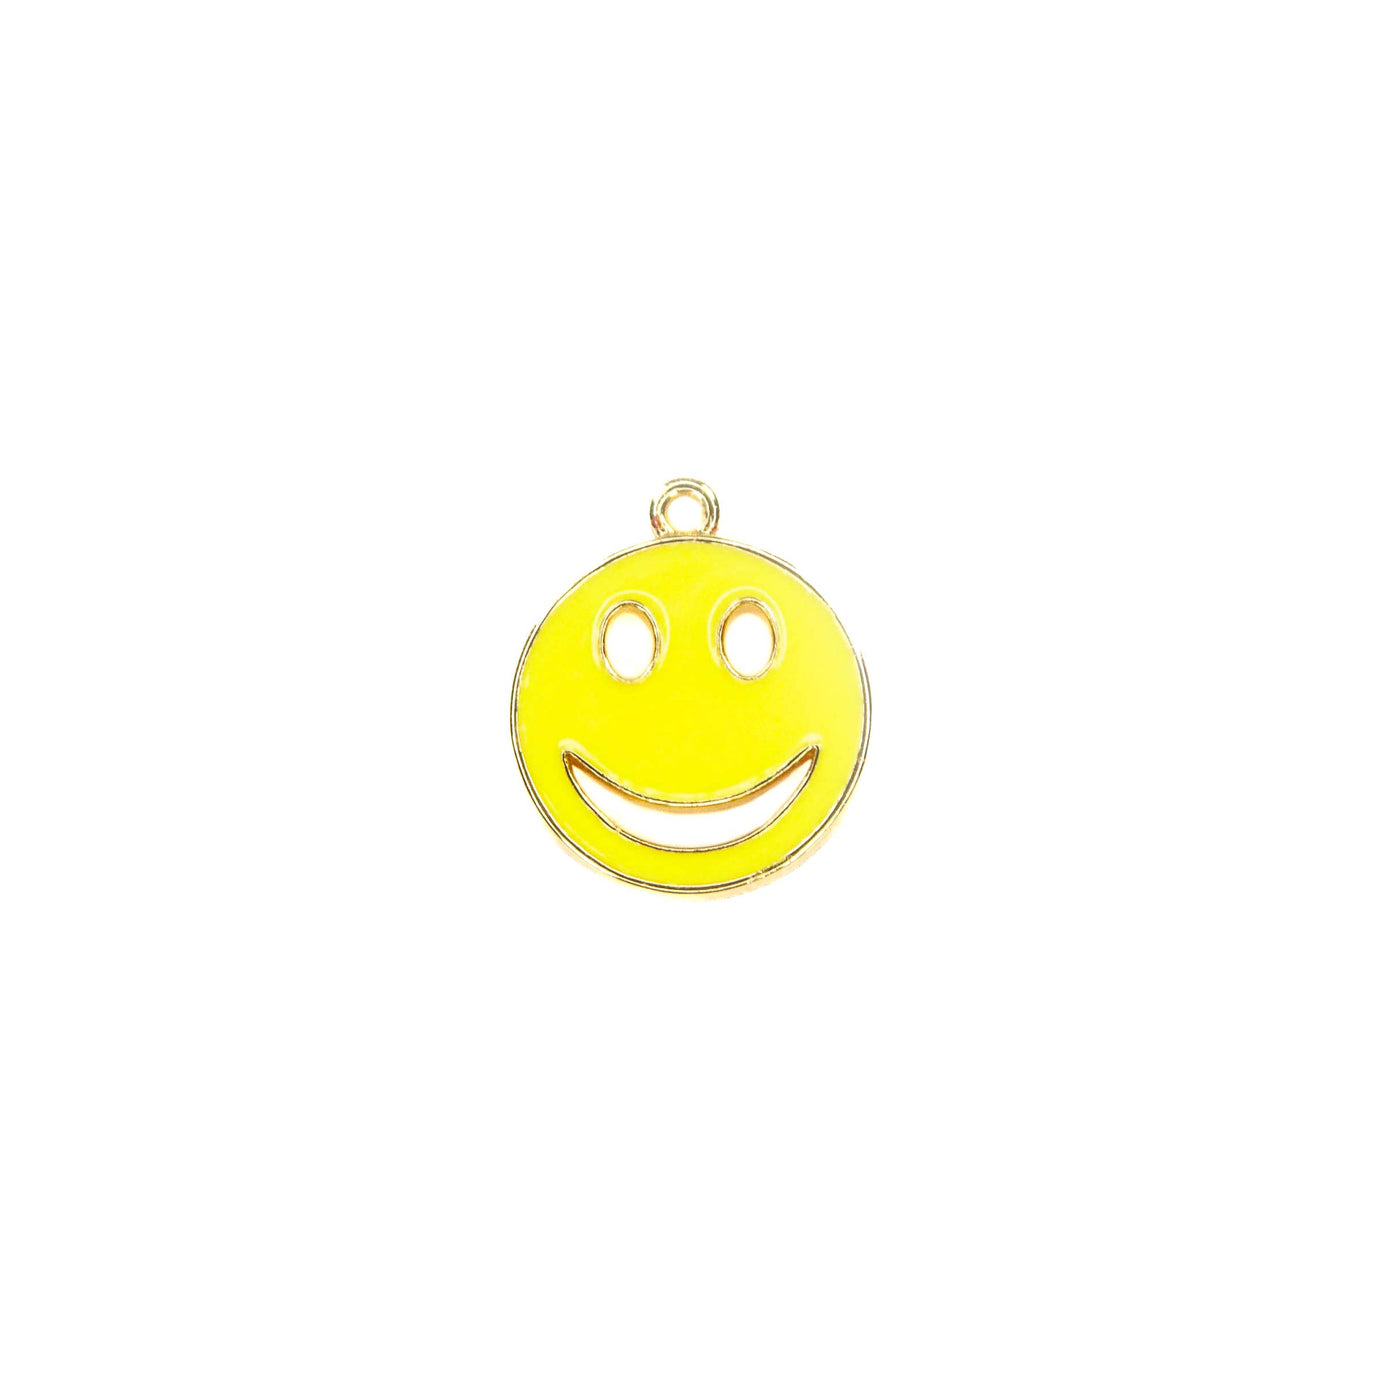 Happy Smile Face Necklace Bracelet Charm - Neon Yellow